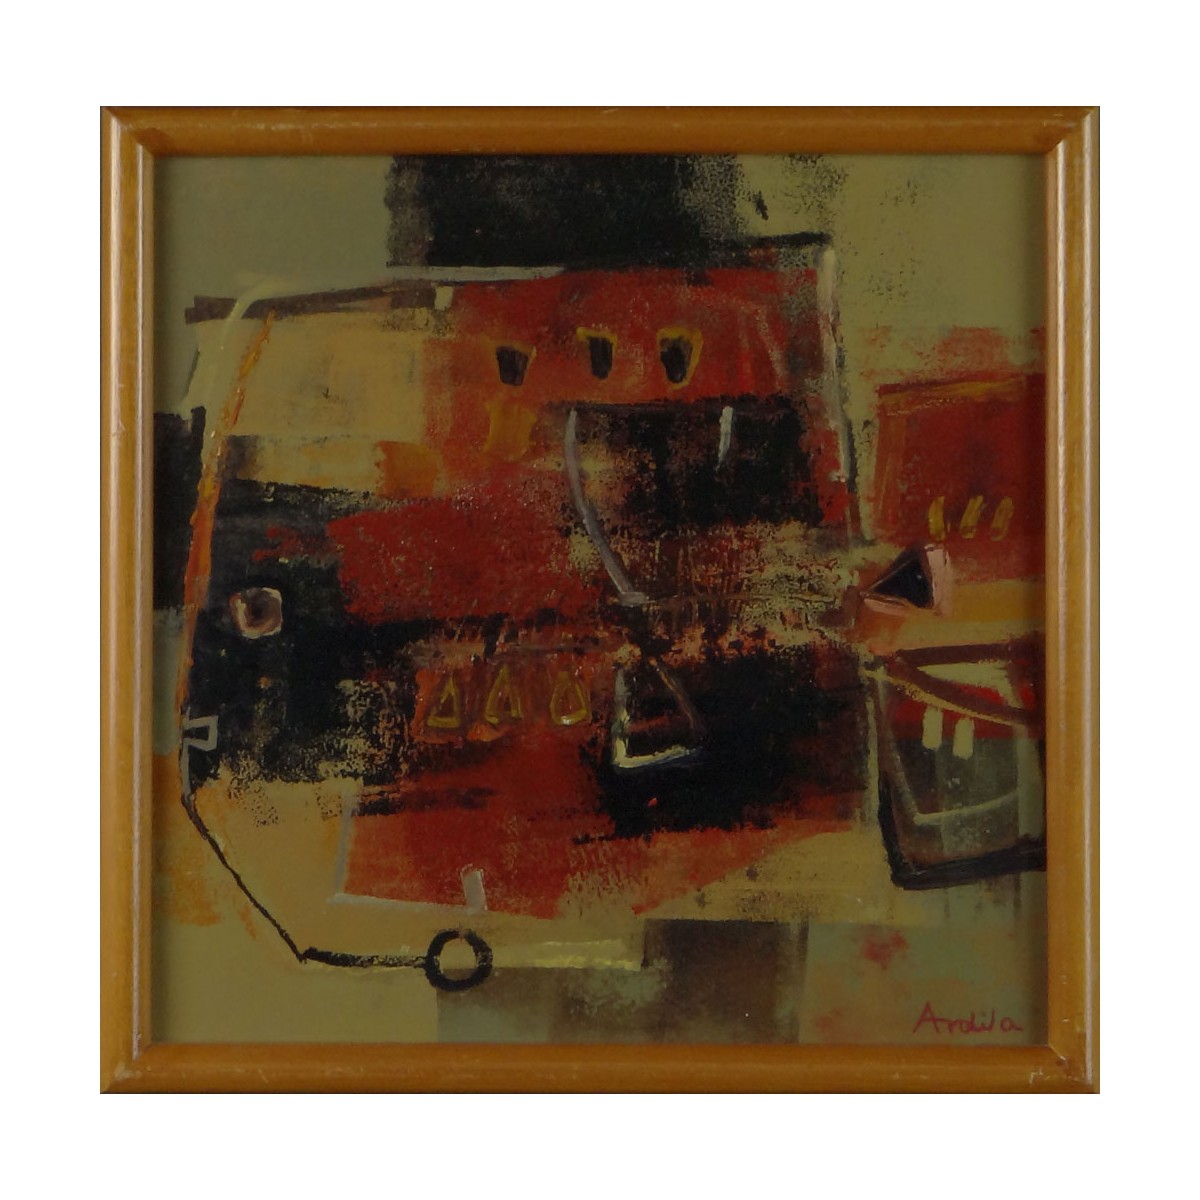 Luis German Ardila, Colombian-American (contemporary) 1990 Oil on Artist's Board, "Pez Cobre y Negr